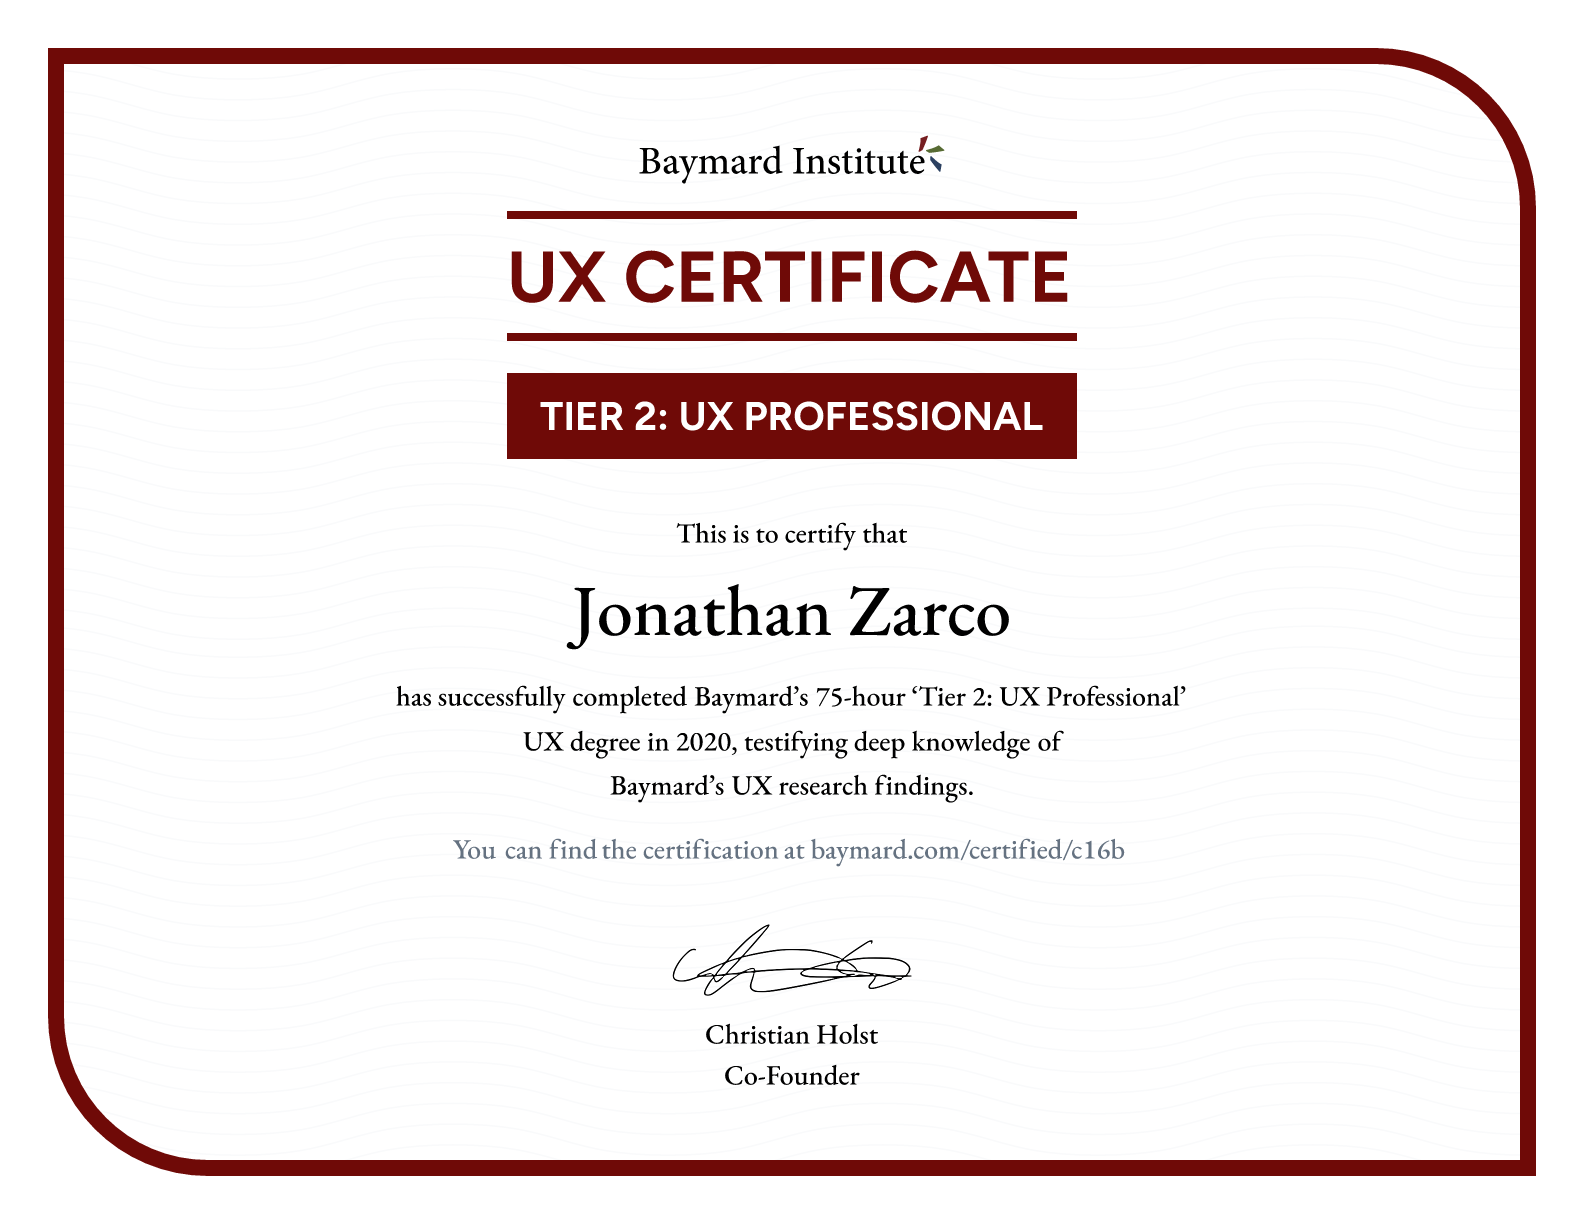 Jonathan Zarco’s certificate